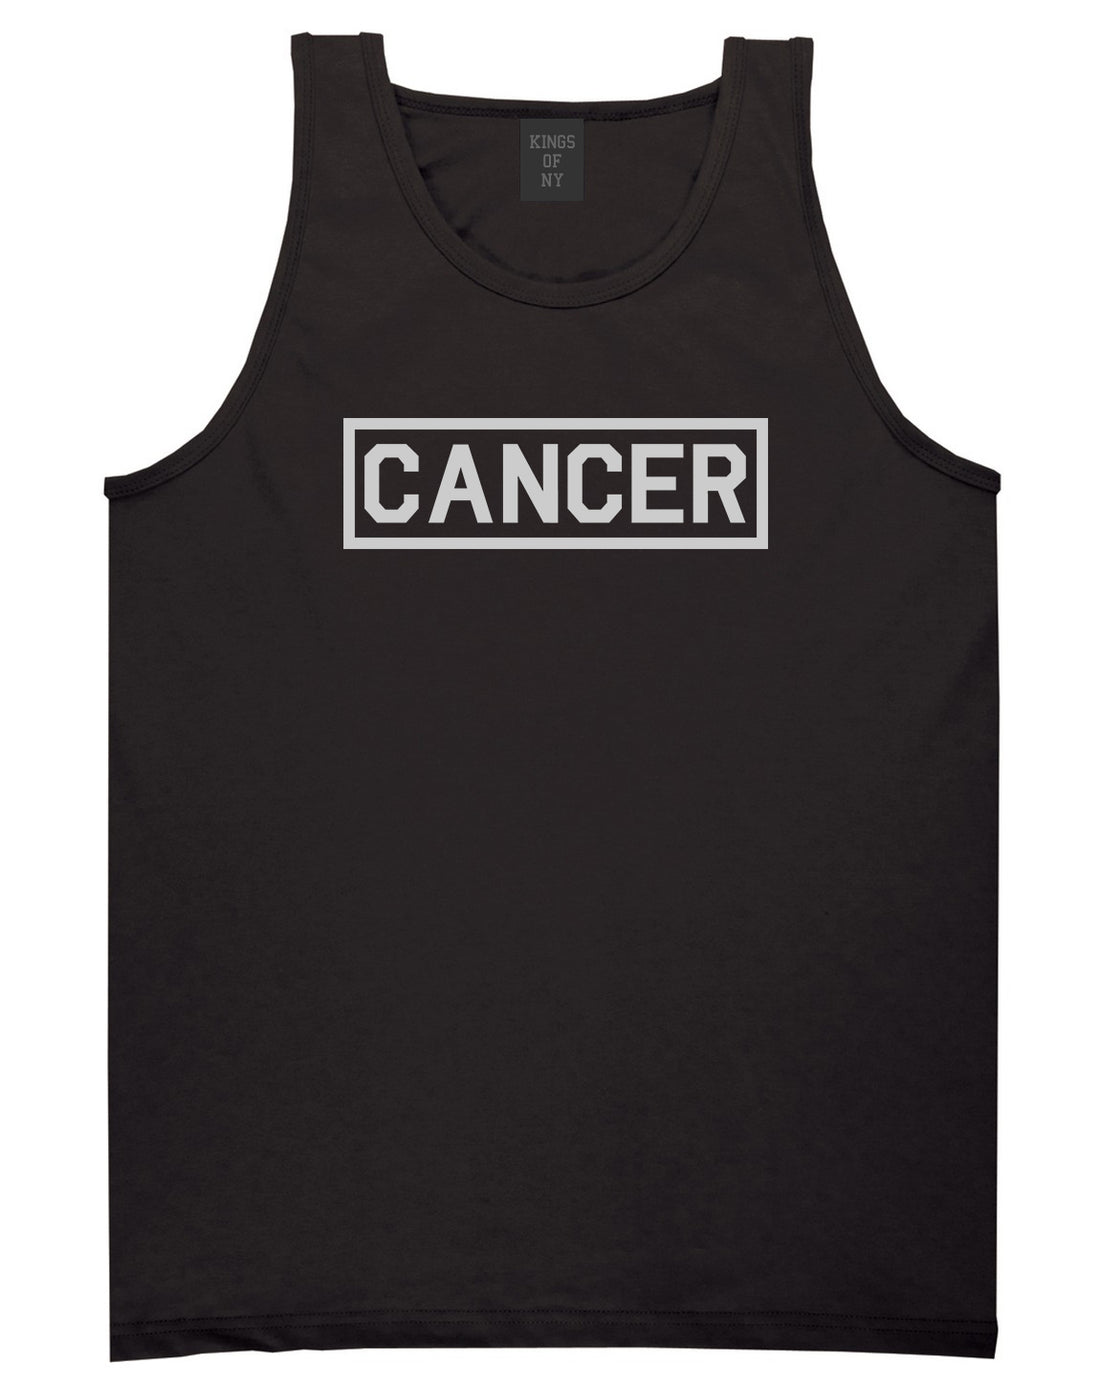 Cancer Horoscope Sign Mens Black Tank Top Shirt by KINGS OF NY